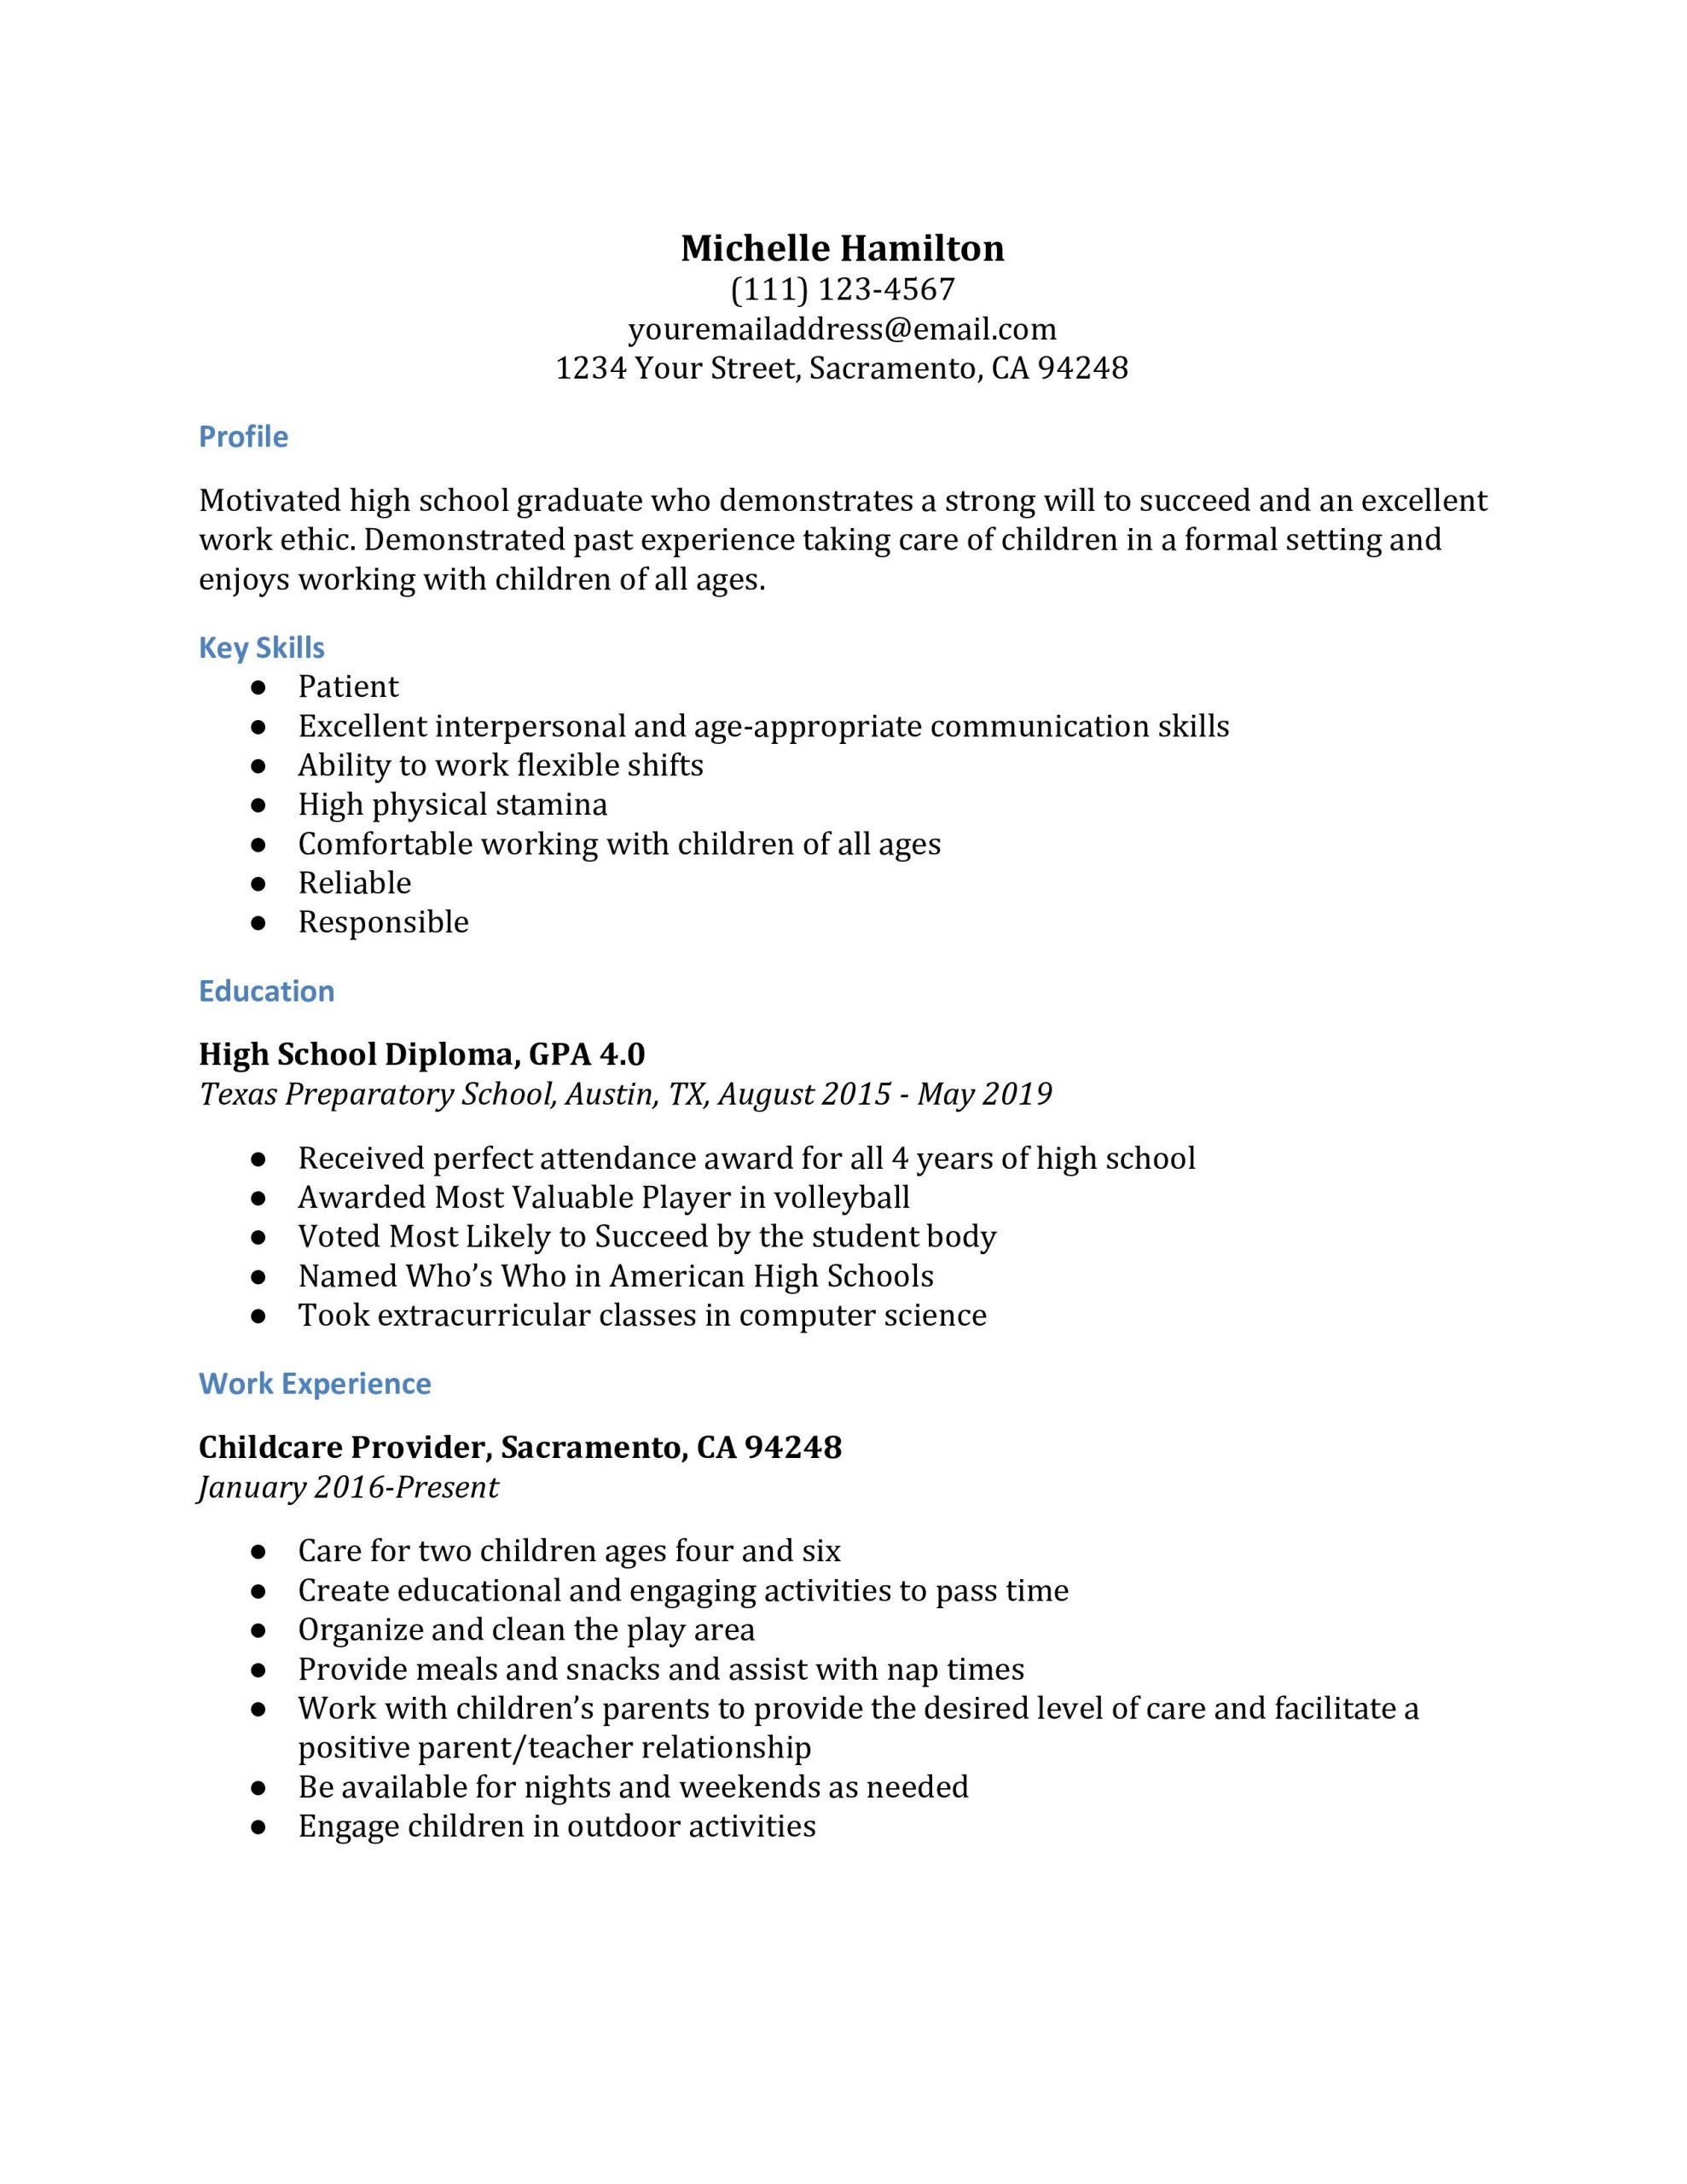 Sample Resume for Recent High School Graduate High School Resume Examples – Resumebuilder.com